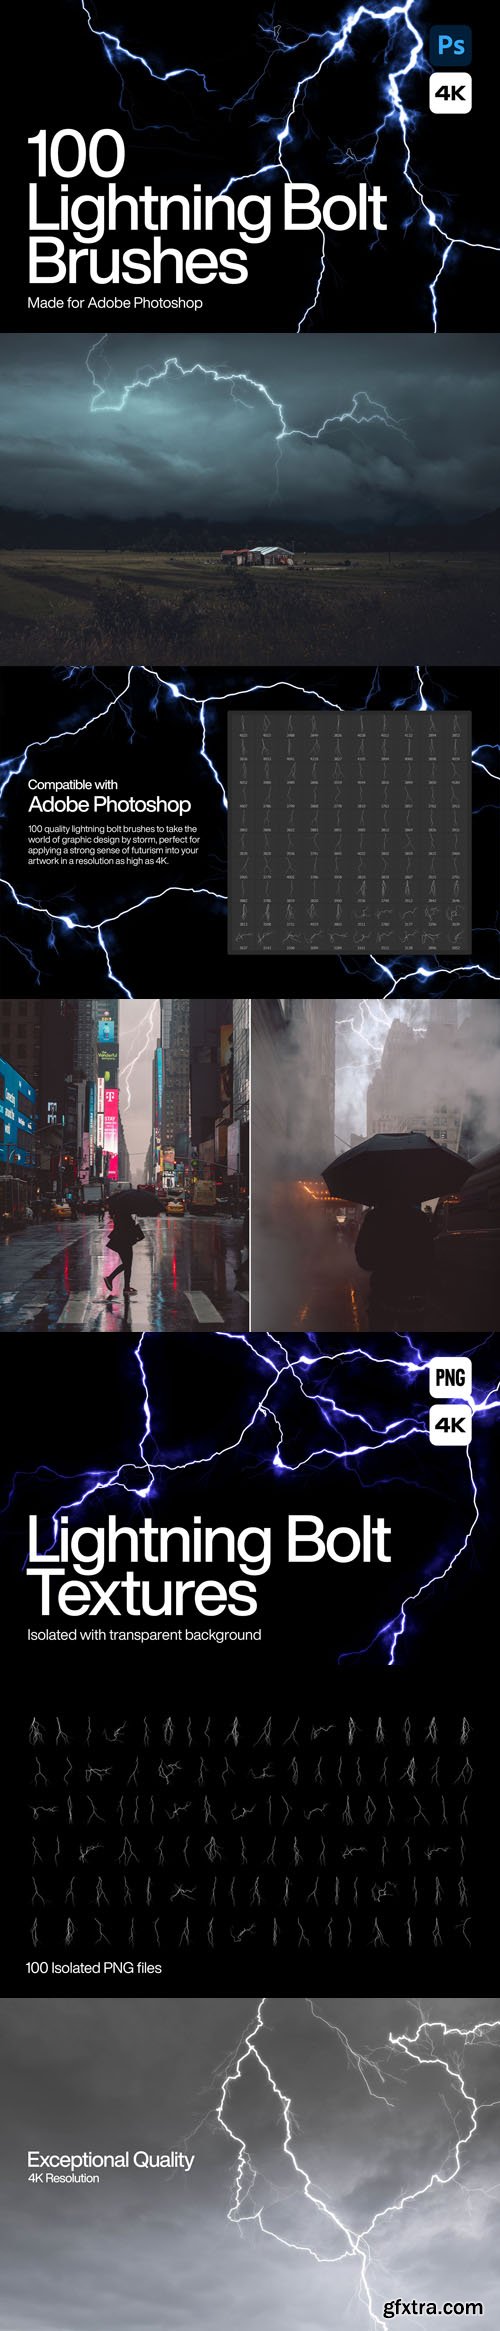 Lightning Bolt Brushes for Photoshop +Textures